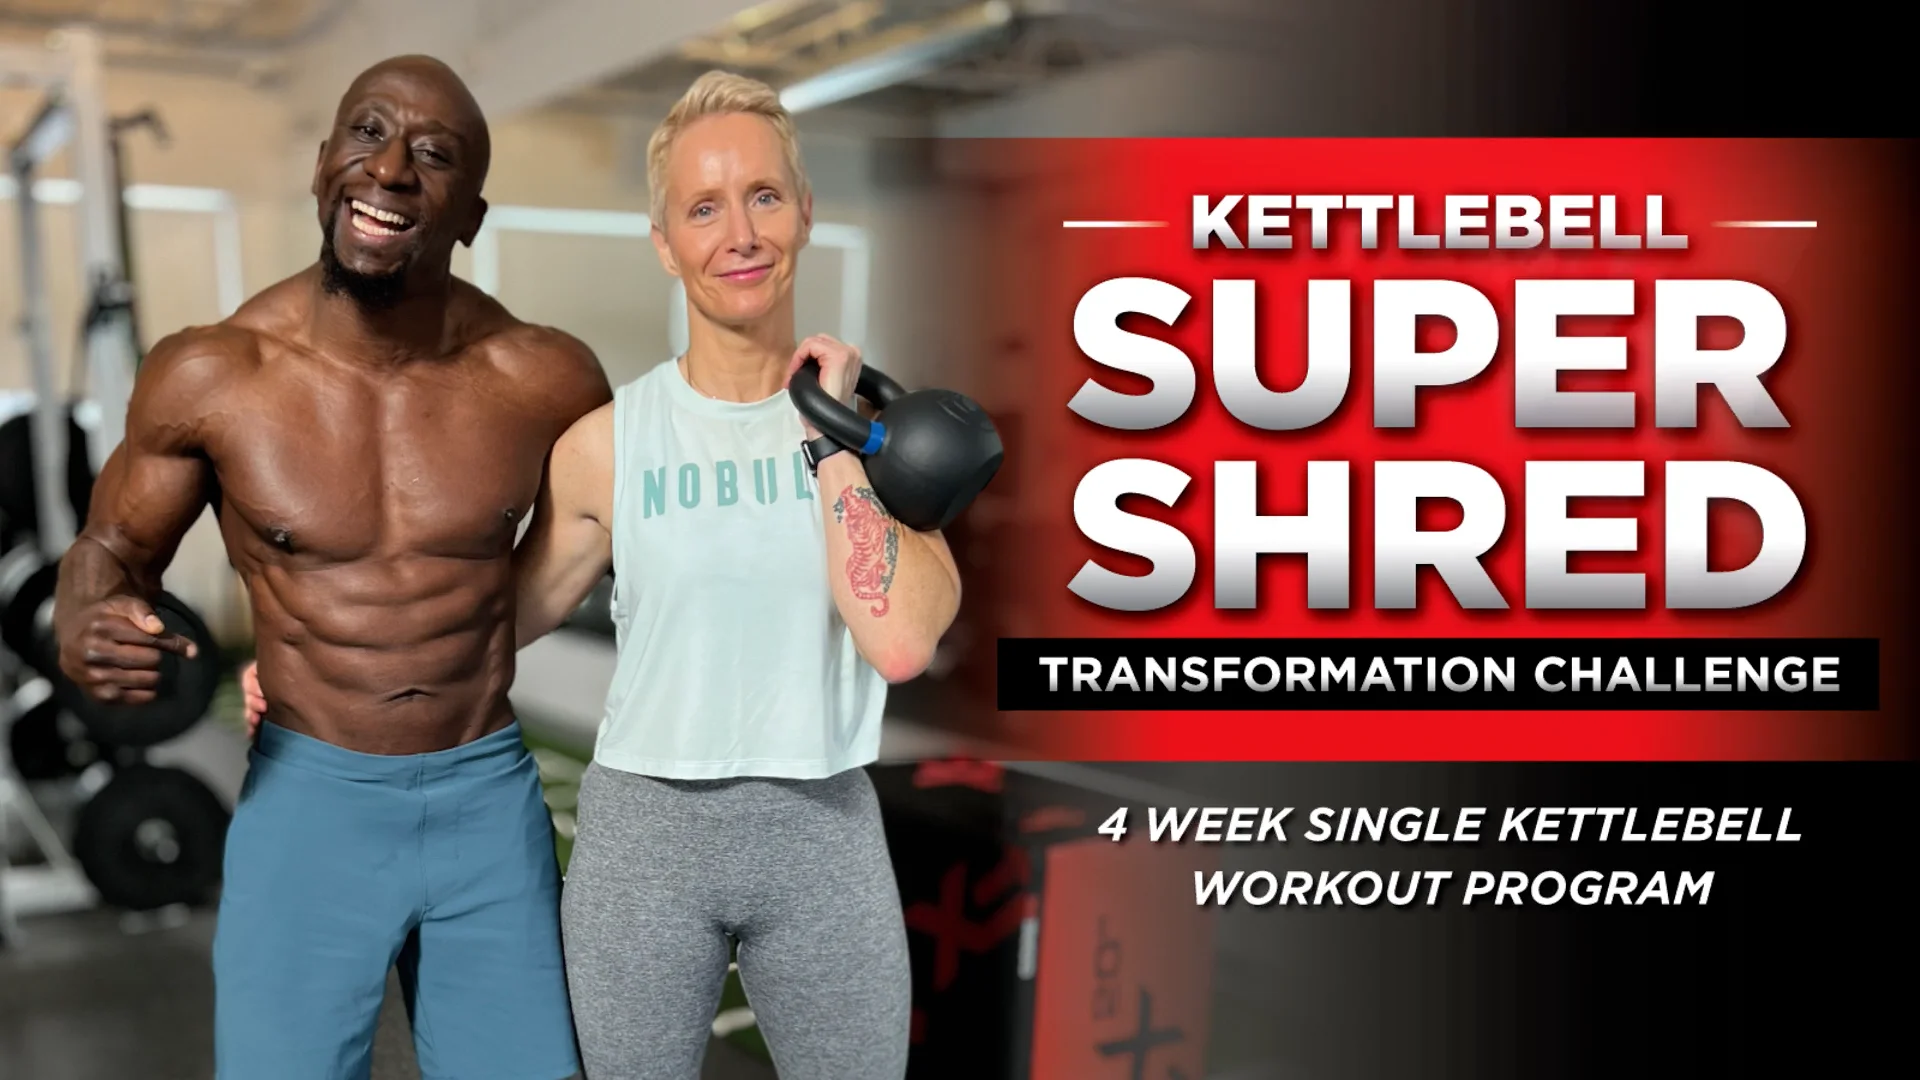 Kettlebell Super Shred 4 Week